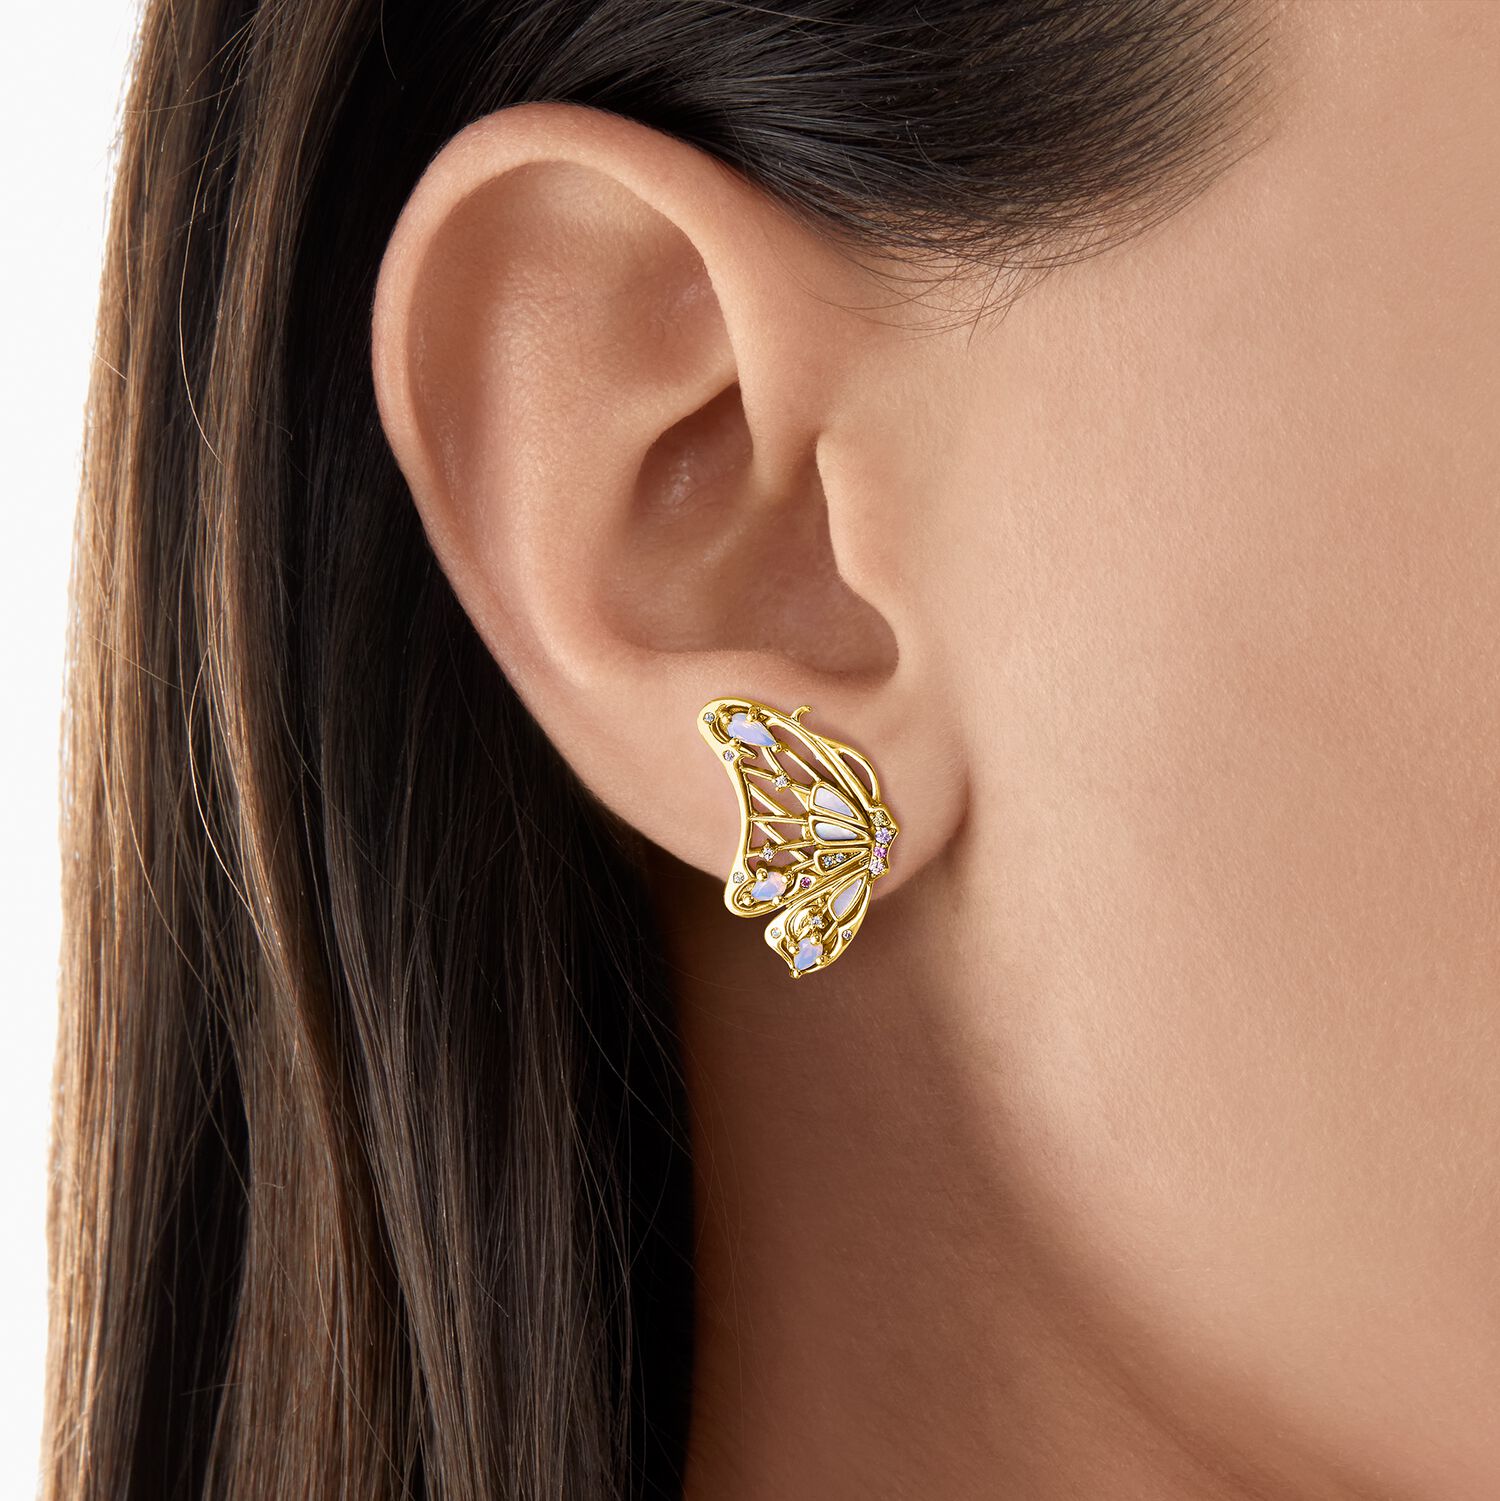 Thomas Sabo Ear Studs Butterfly Gold Earrings Thomas Sabo 